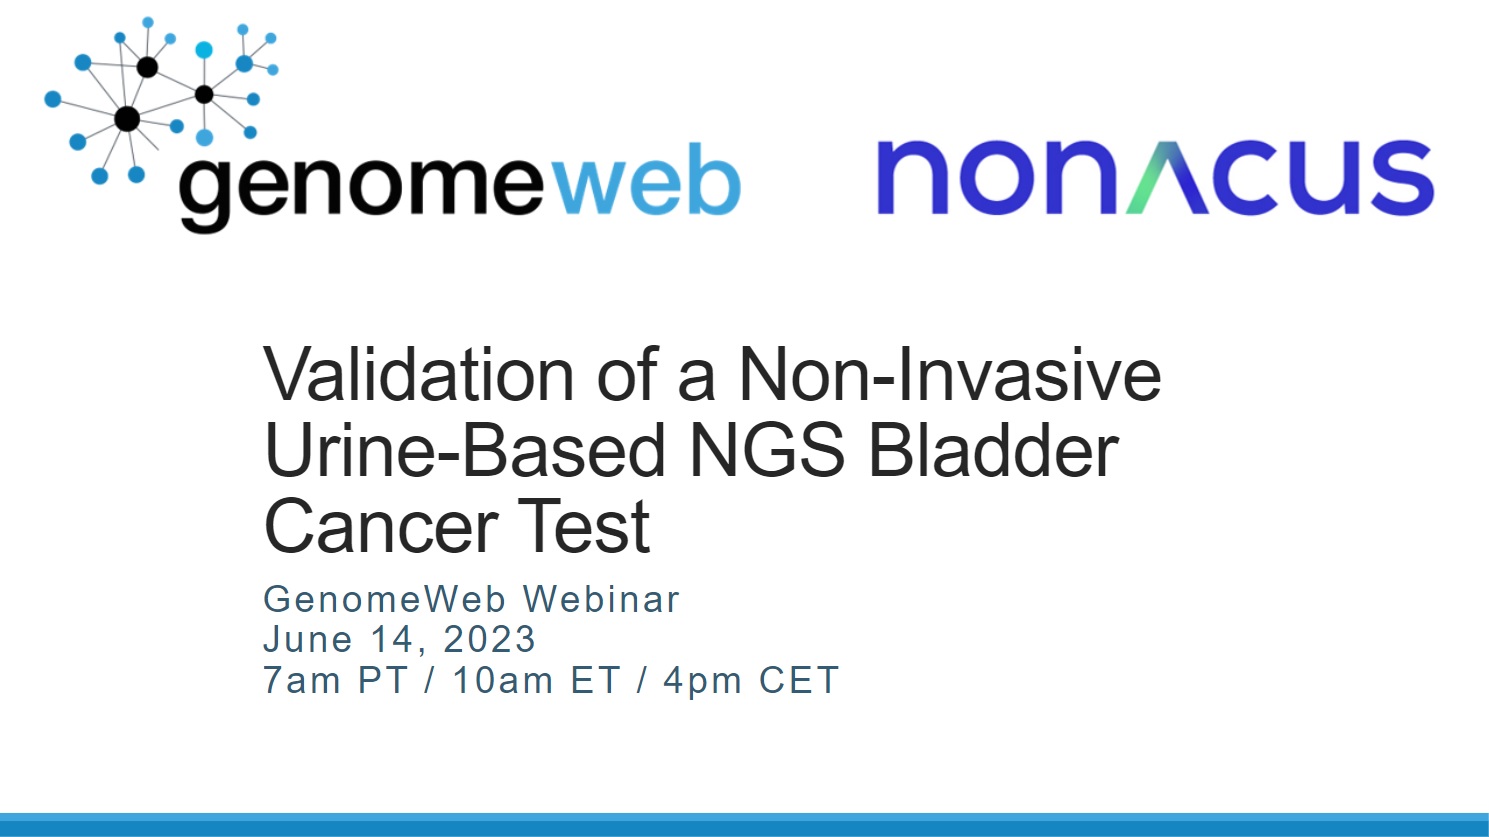 genomeweb-nonacus-webinar-validation-of-a-non-invasive-urine-based-ngs-bladder-cancer-test (1)